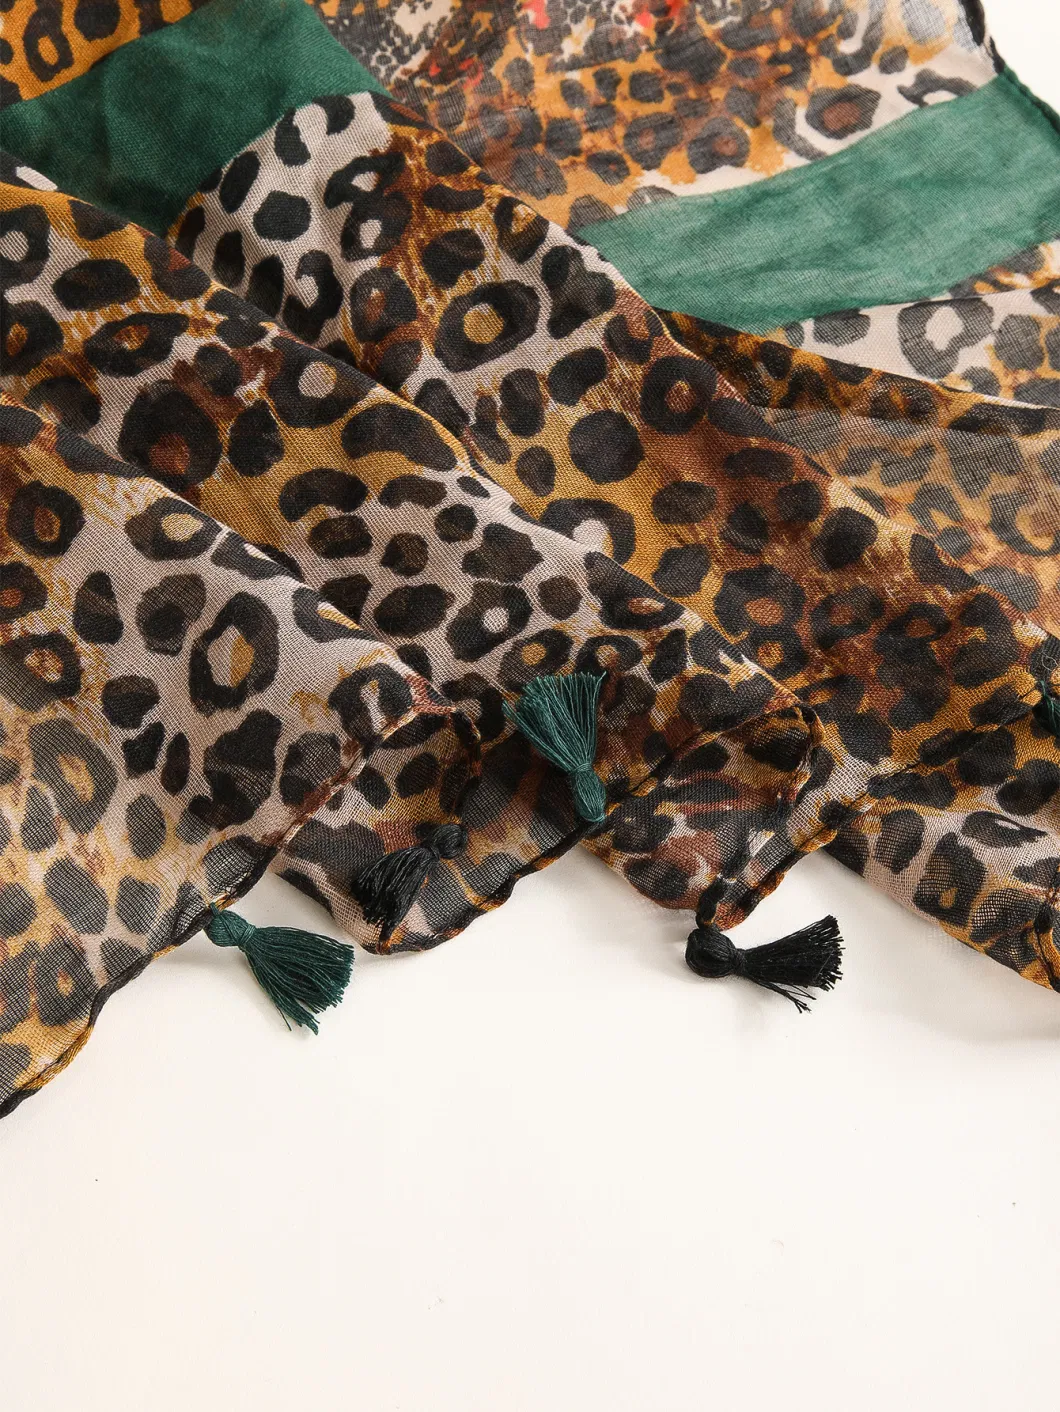 Leopard Print Pashmina Silky Shawl Kimono Scarfs Stole Wrap Cover up Women